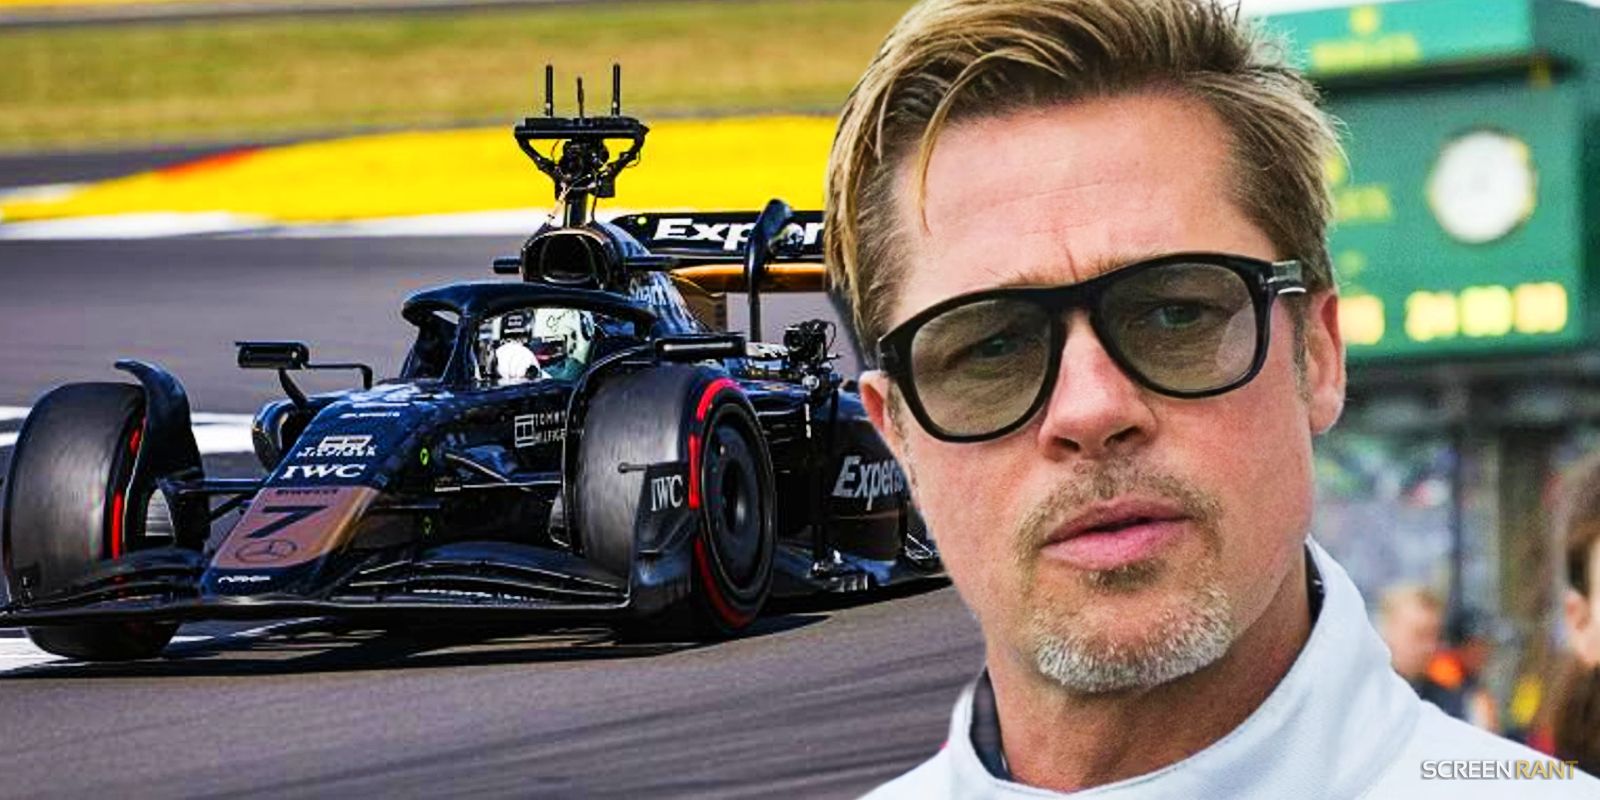 Formula One race car next to Brad Pitt in F1 movie